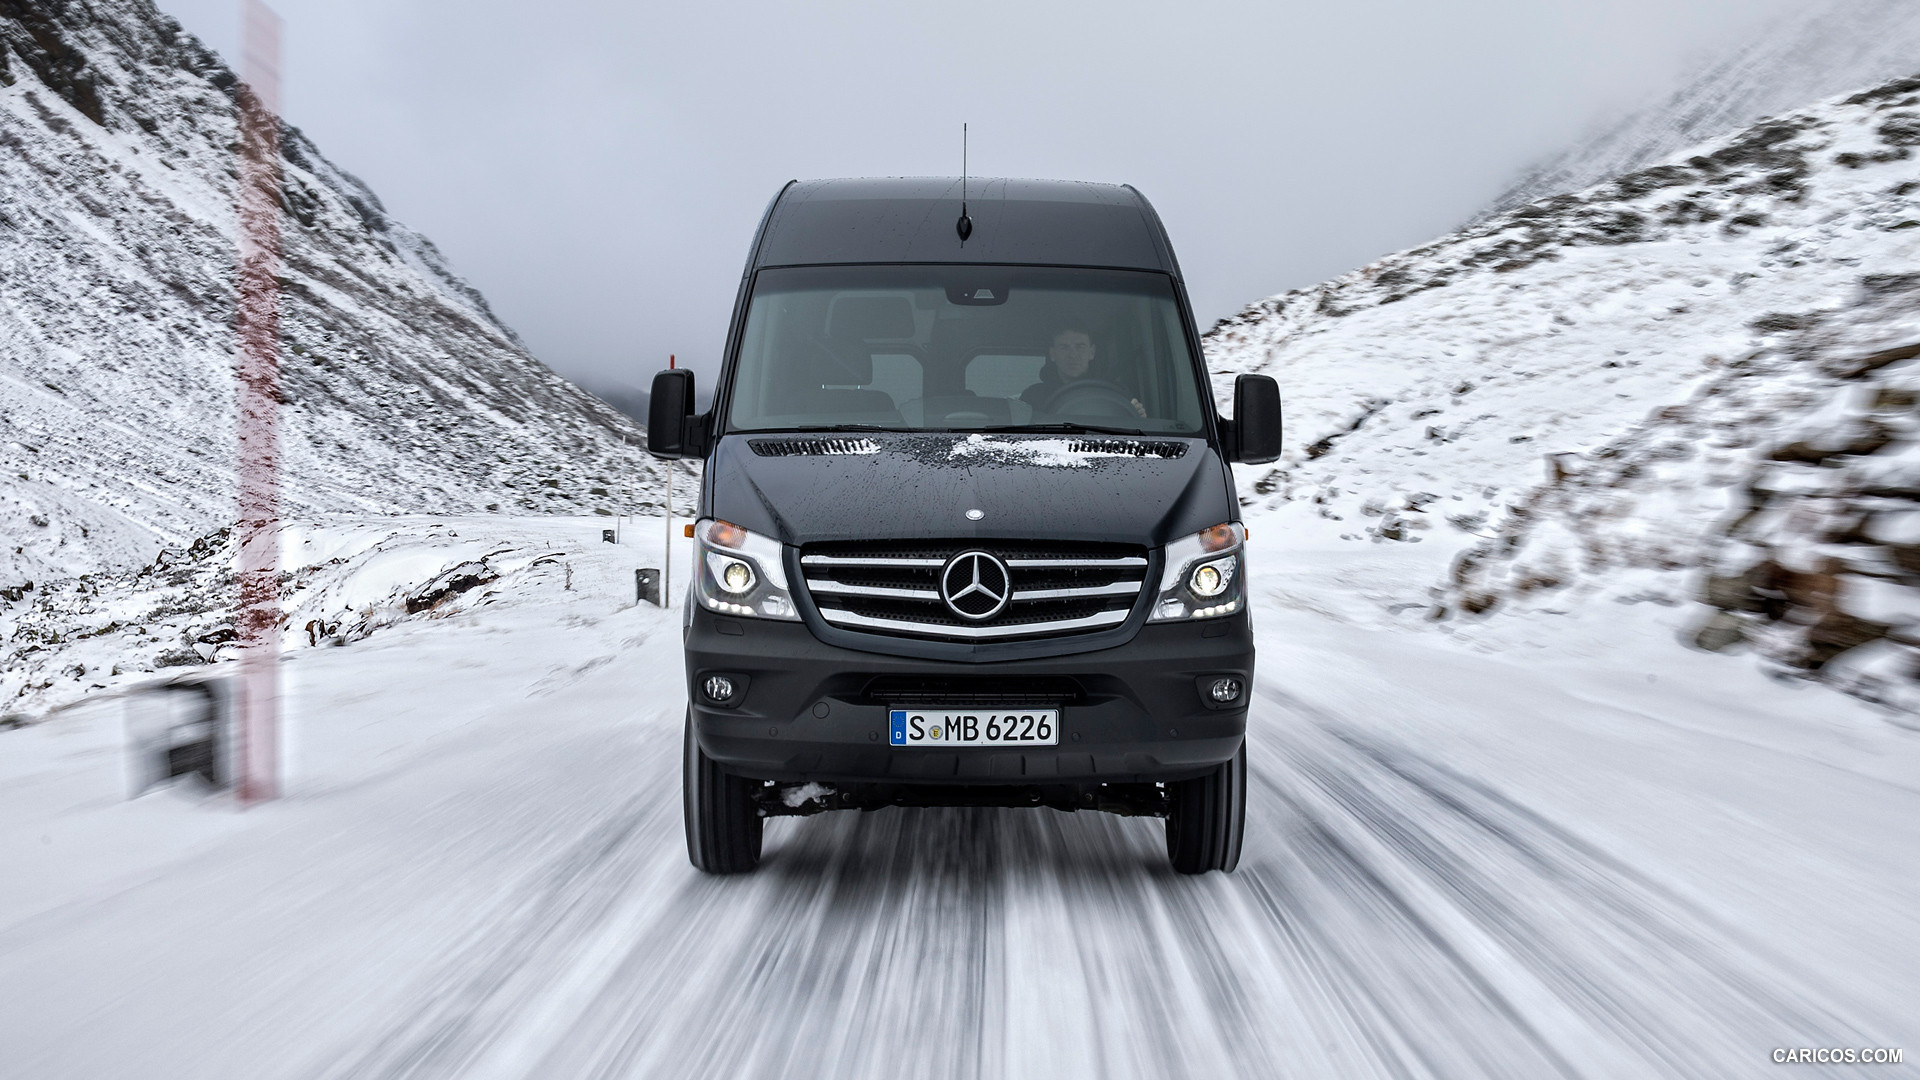 2015 Mercedes-Benz Sprinter 316 BlueTec 4X4 - In Snow - Front, #12 of 126